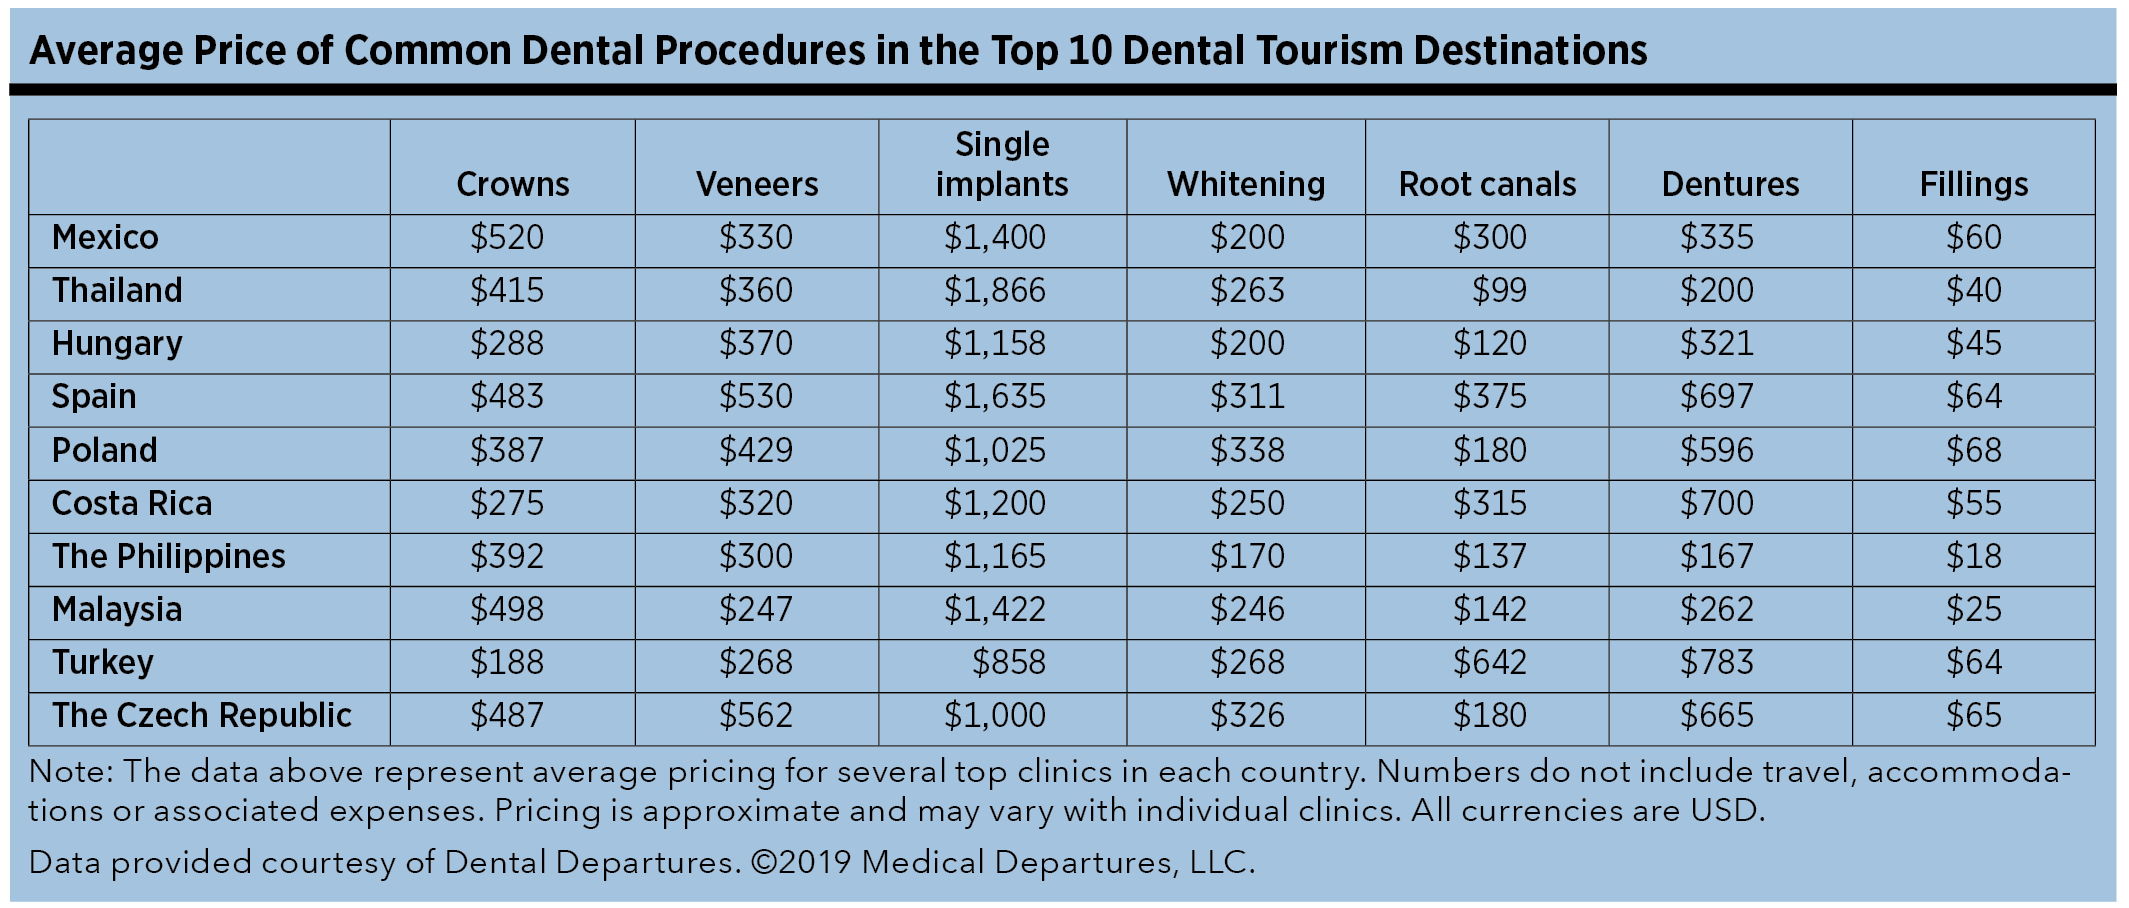 Top 10 Dental Insurance for Implants  